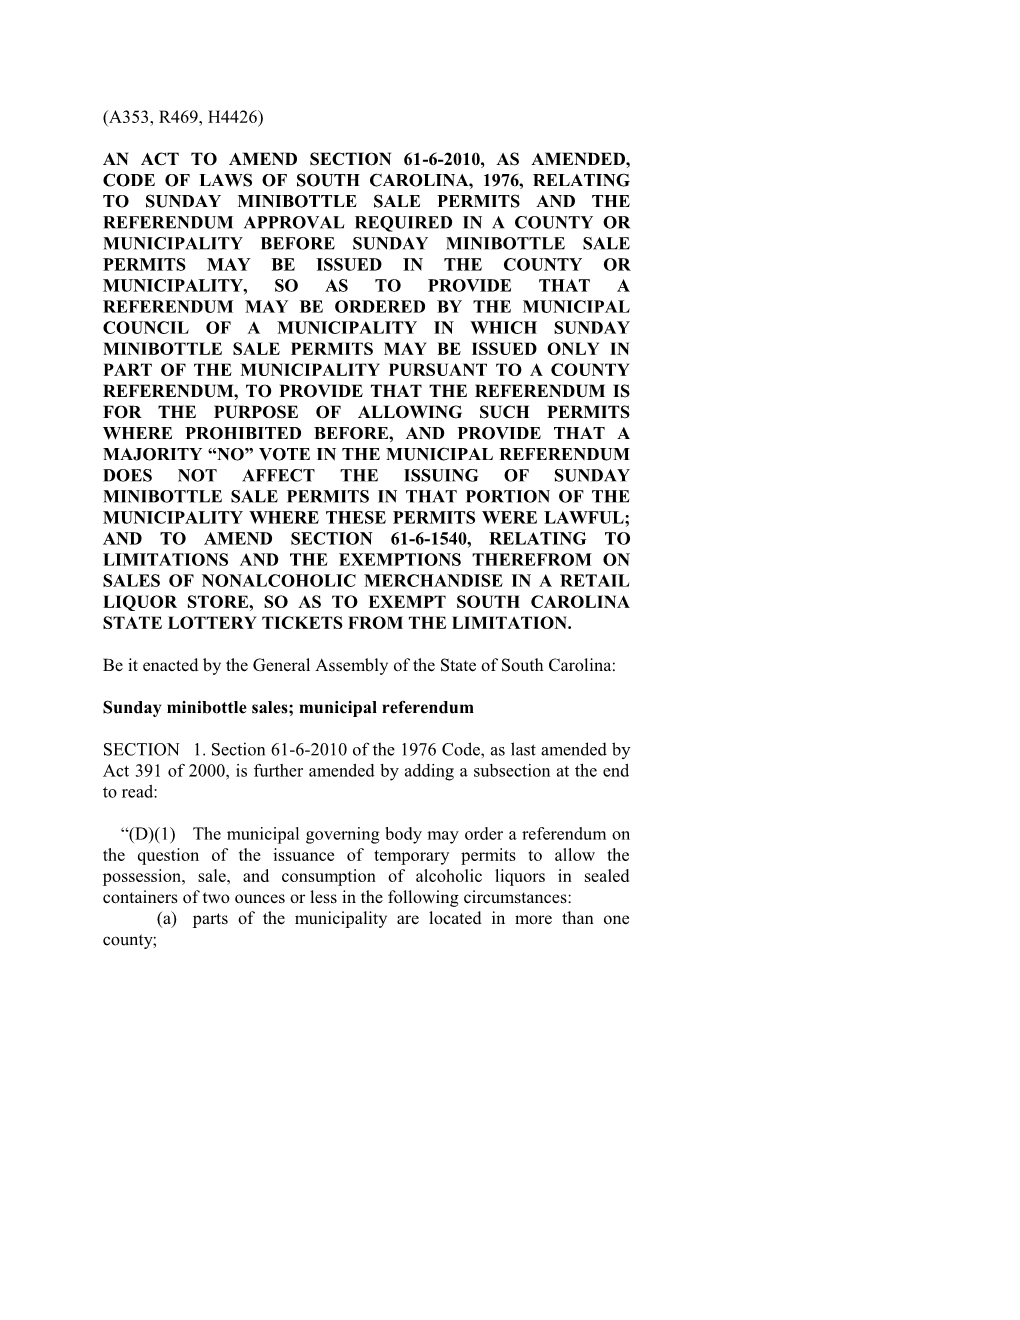 2001-2002 Bill 4426: Sunday Minibottle Sale Permits, Provisions Regarding Referendums Held